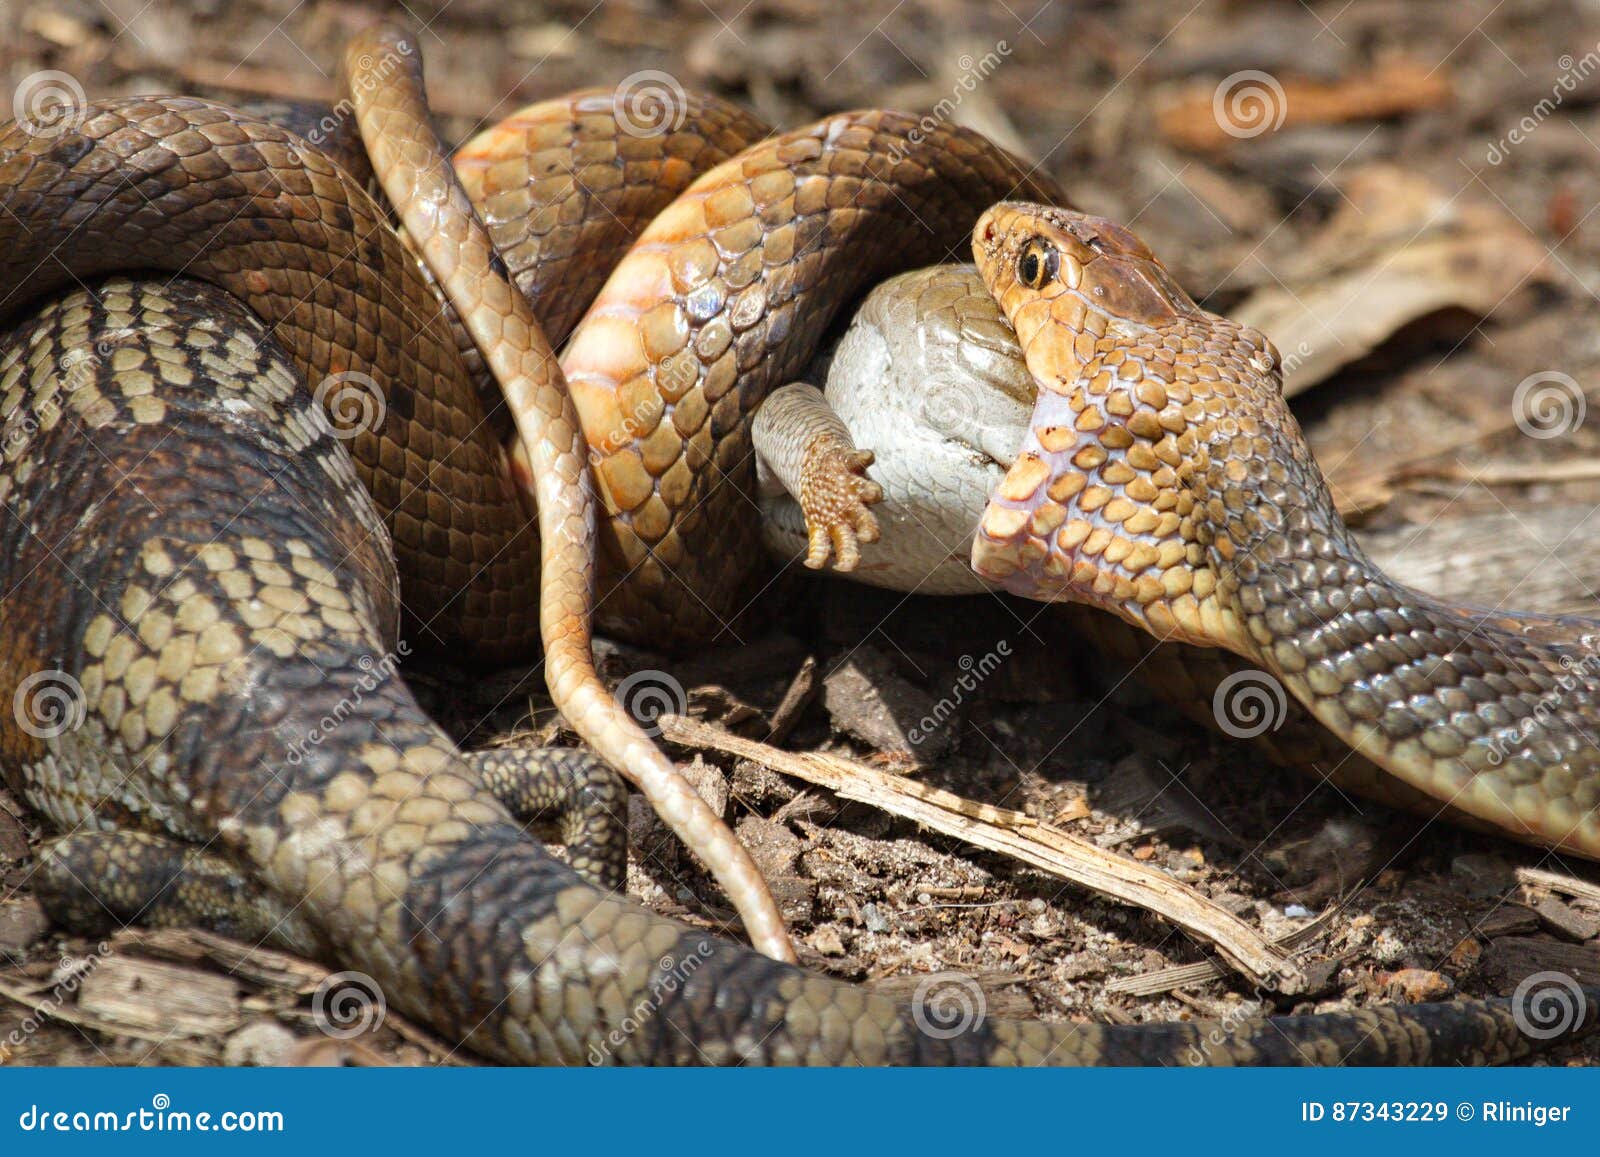 eastern brown snake vs bluetongue lizard